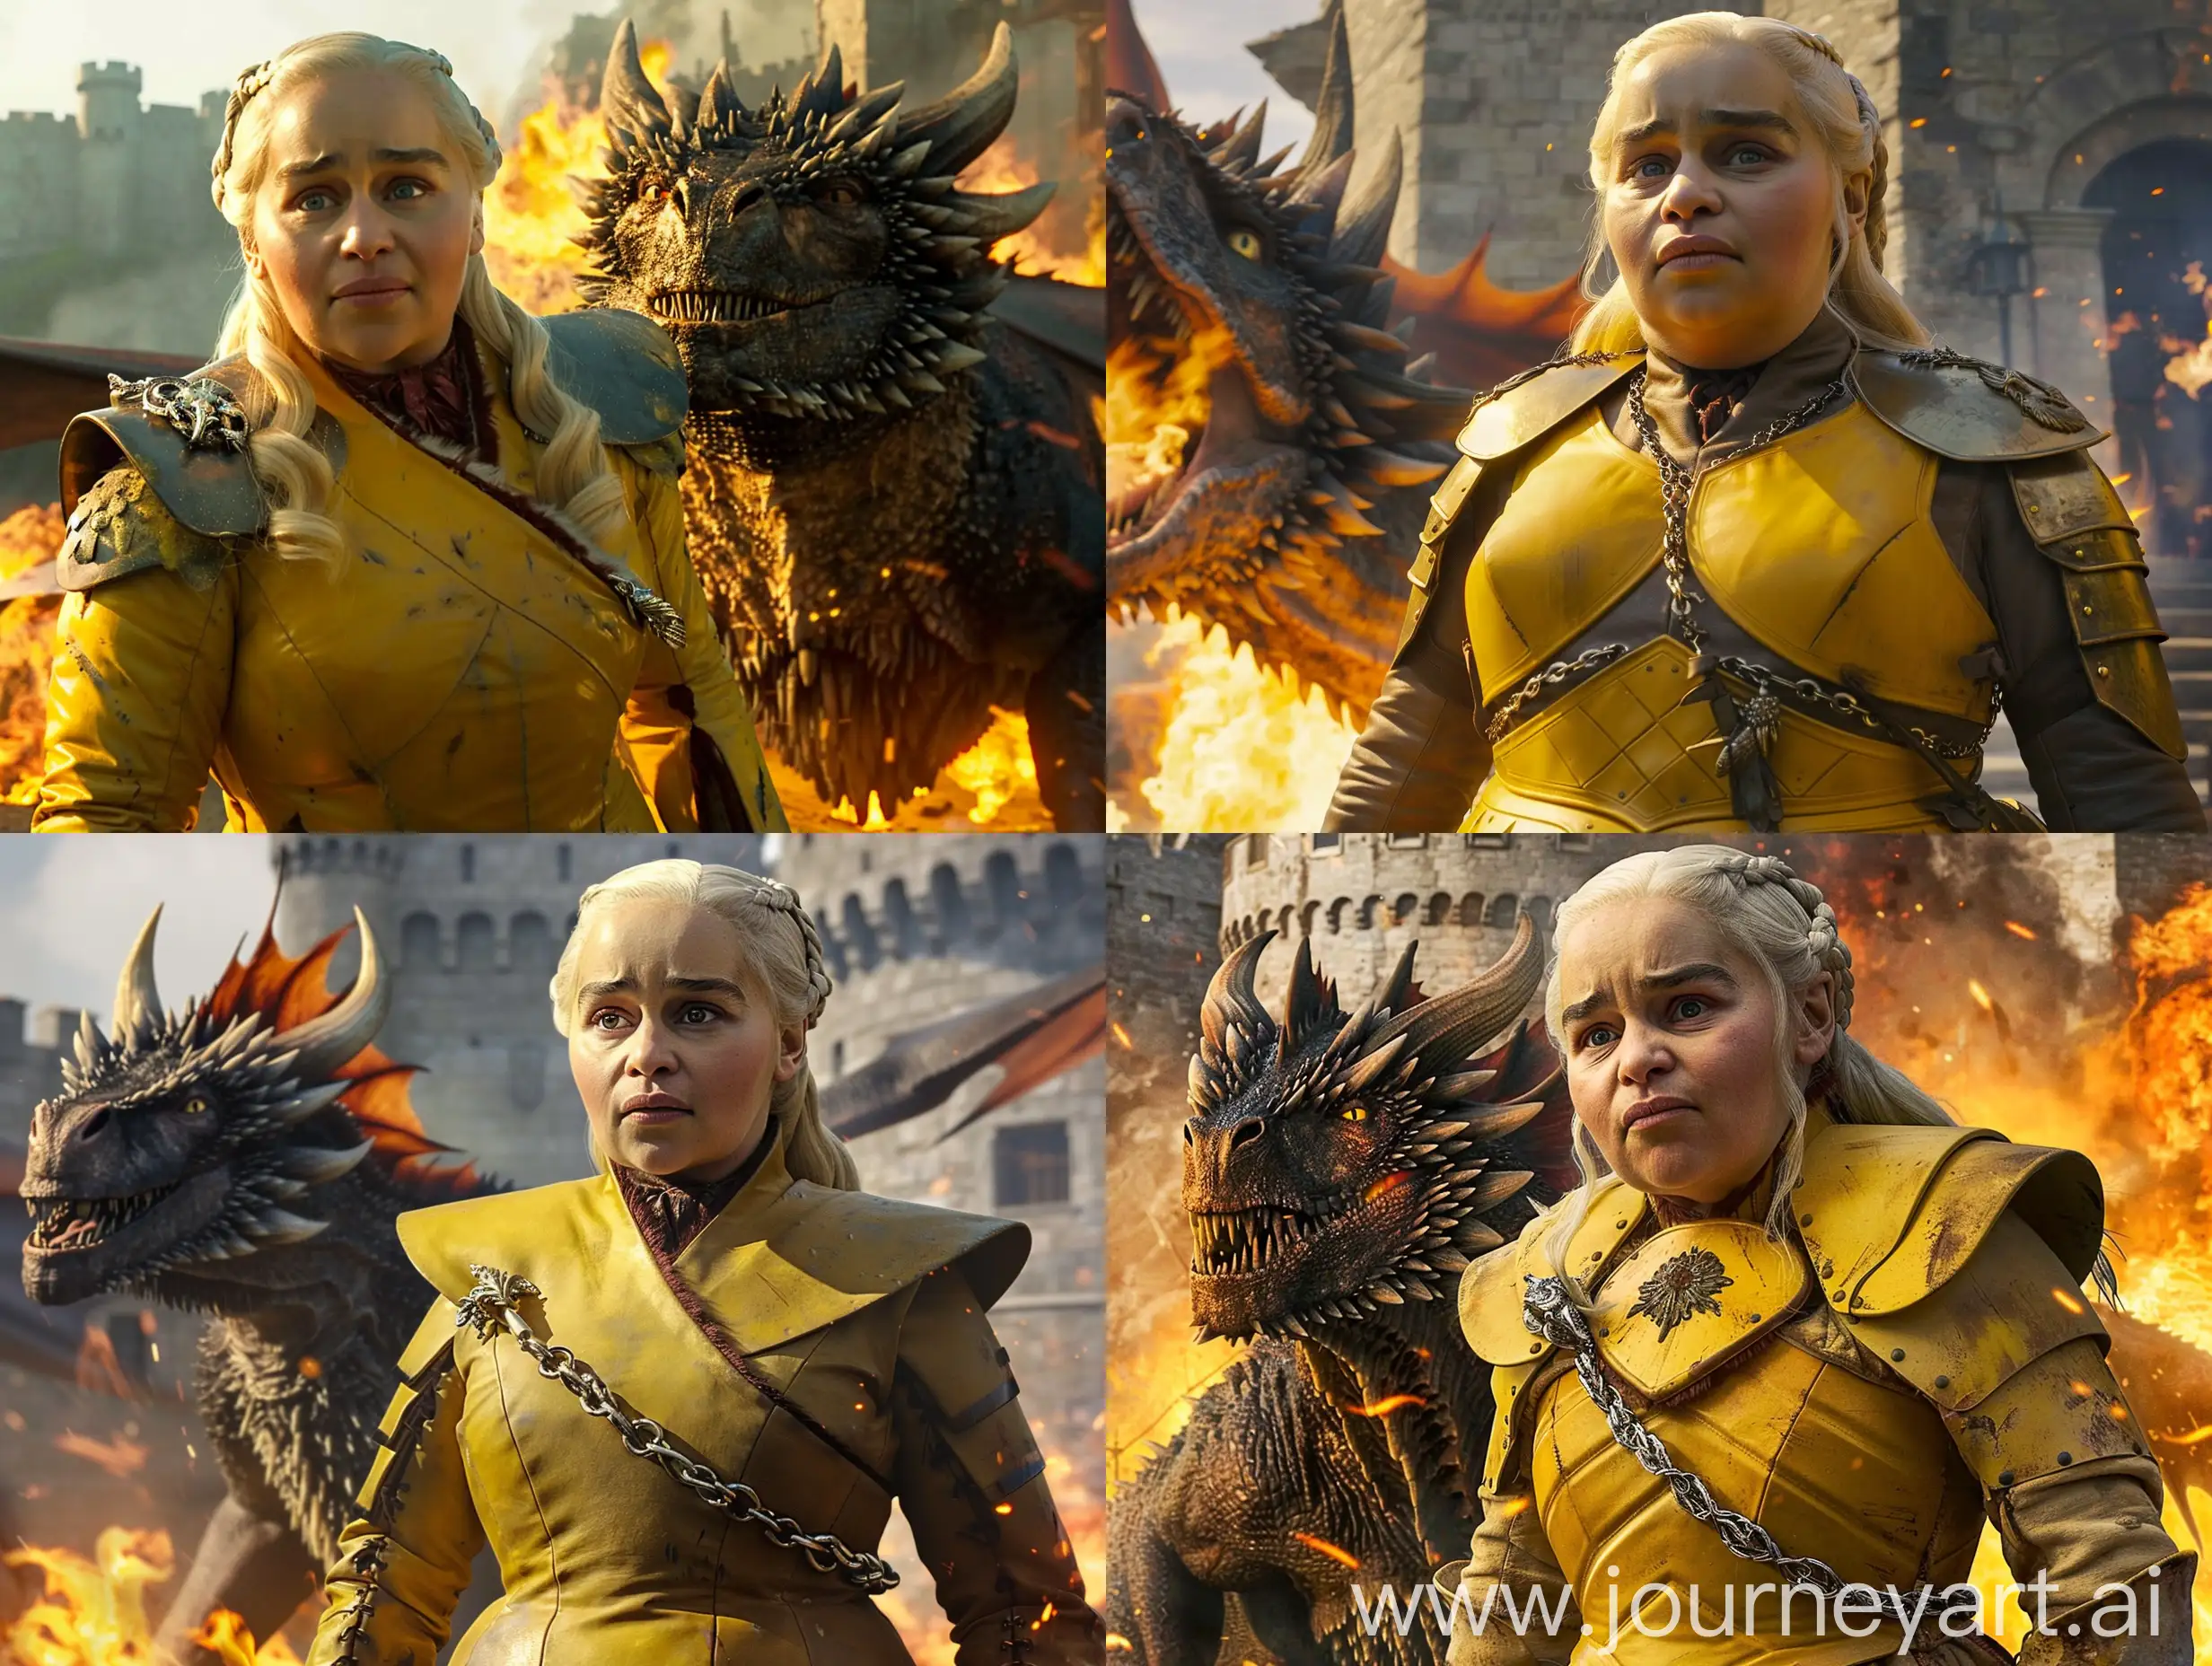 Daenerys-Targaryen-in-Yellow-Military-Armor-with-Dragon-at-Winterfell-Castle